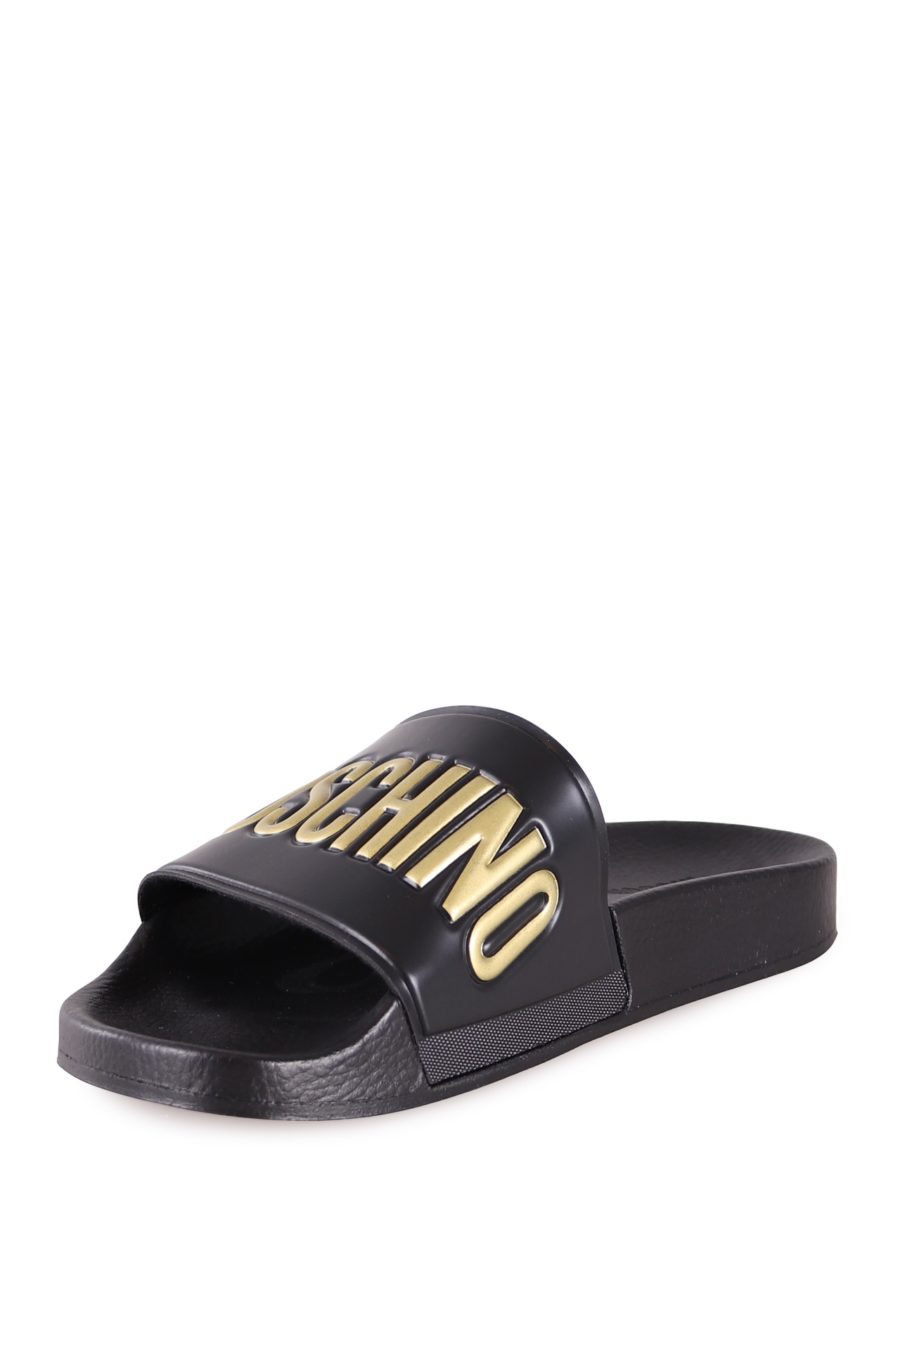 Moschino Couture tongs noires avec logo doré - aa6472c0eabfd89c0c544a3de78cf30000589c59